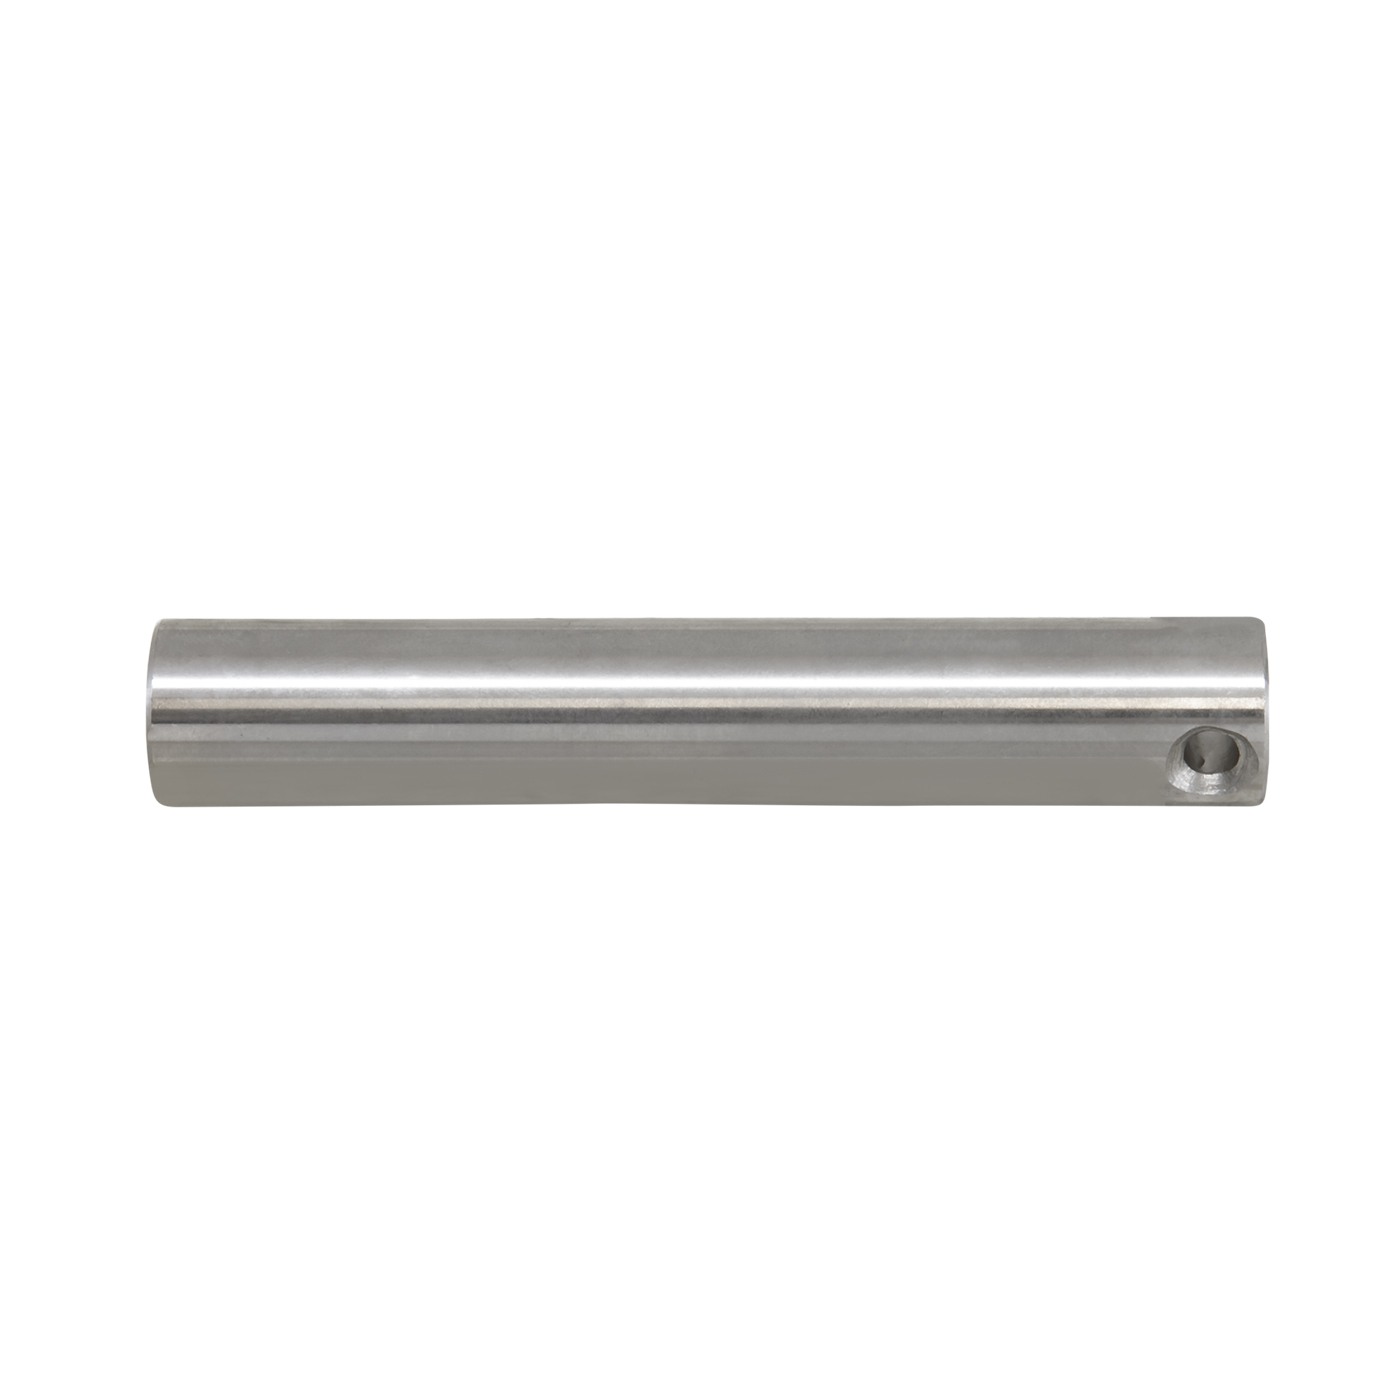 Model 35 TracLoc & standard Open cross pin shaft, bolt design, 0.716" DIA. 